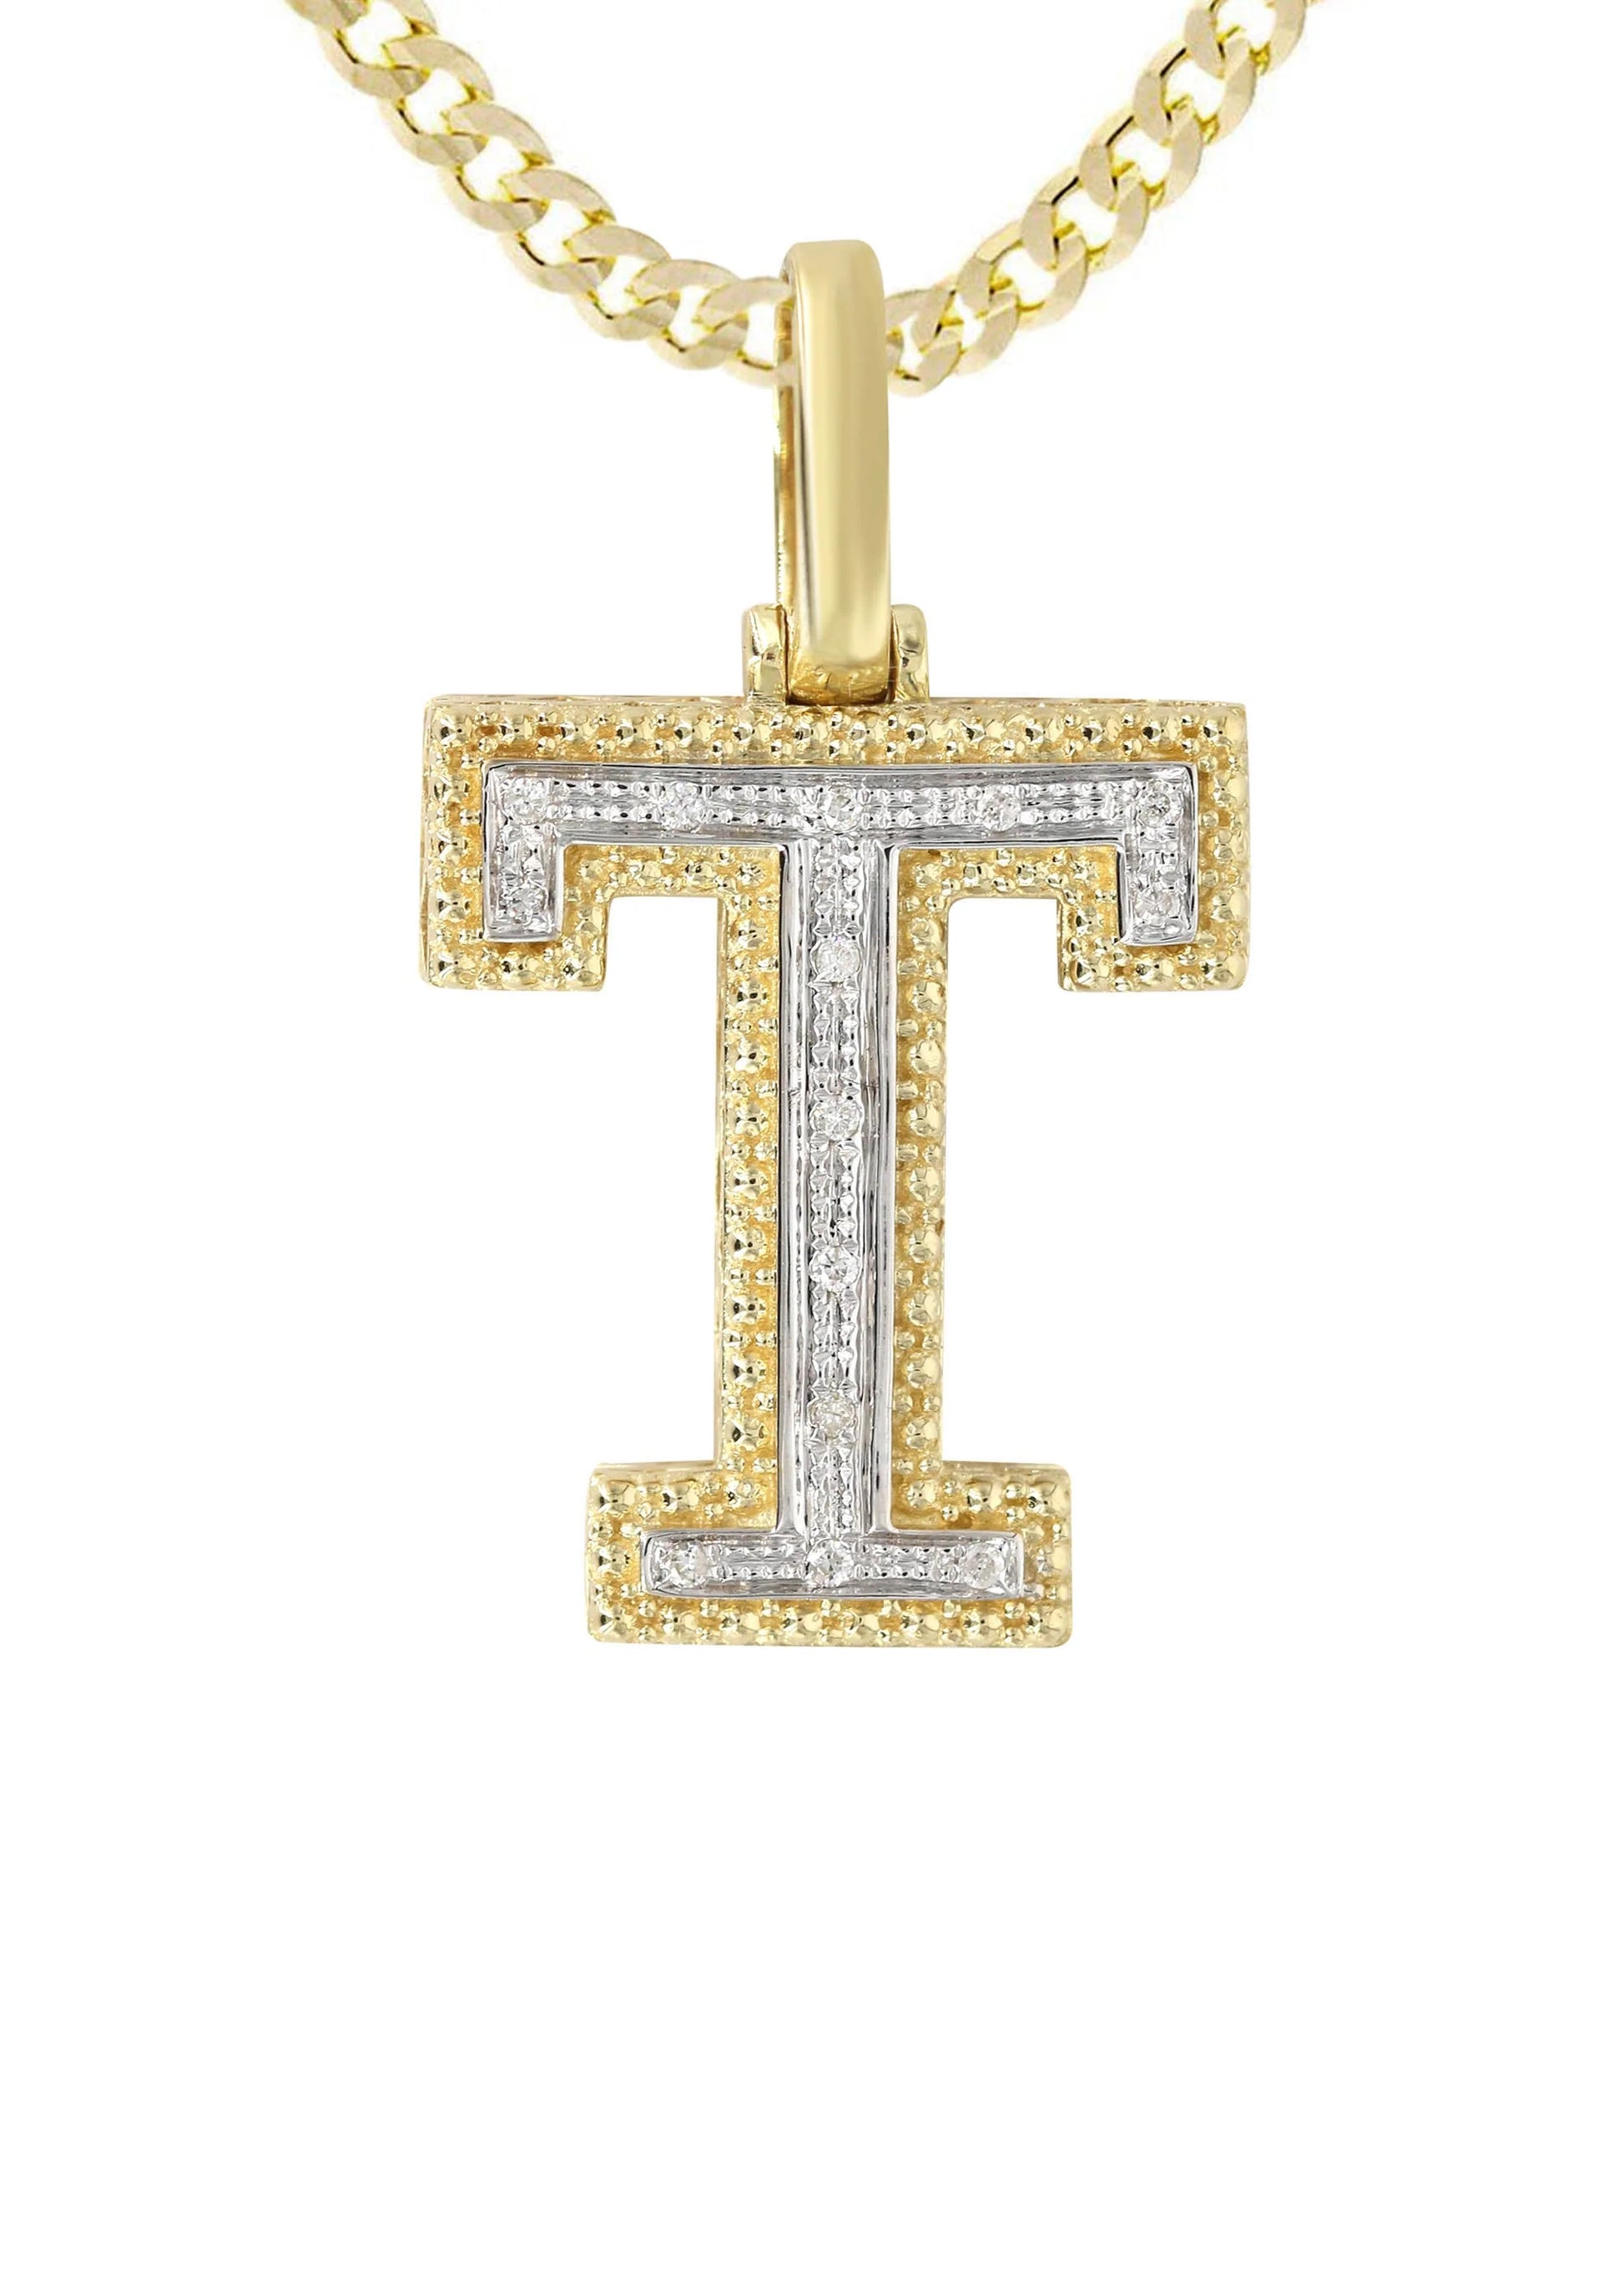 10k Yellow Gold Diamond Pendant Letter "T"